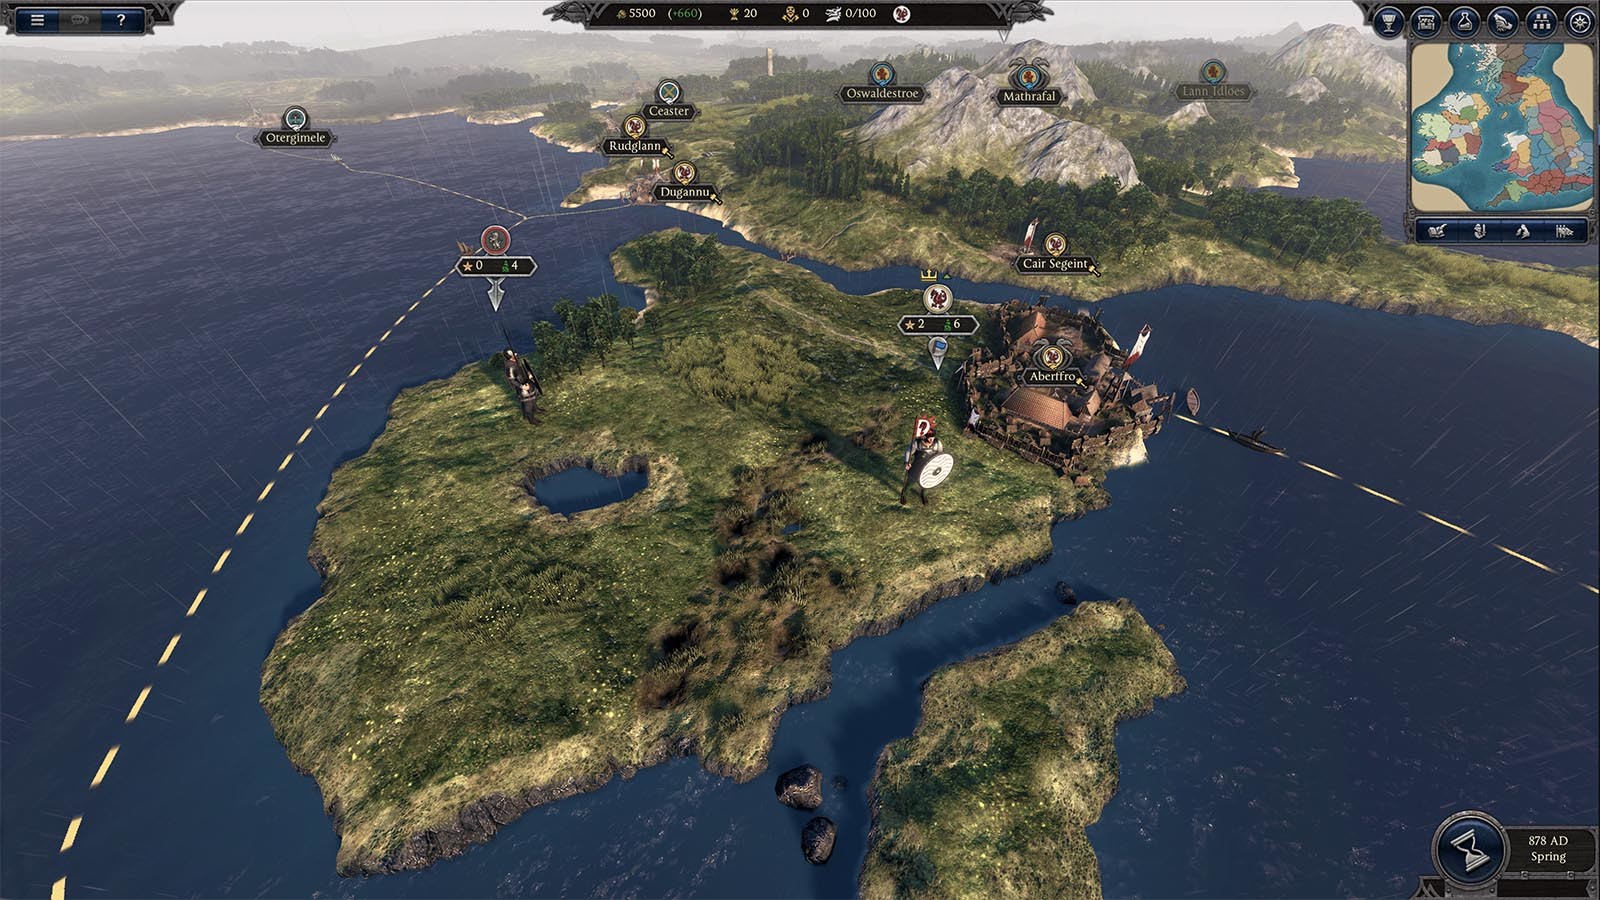 total war saga thrones of britannia platforms